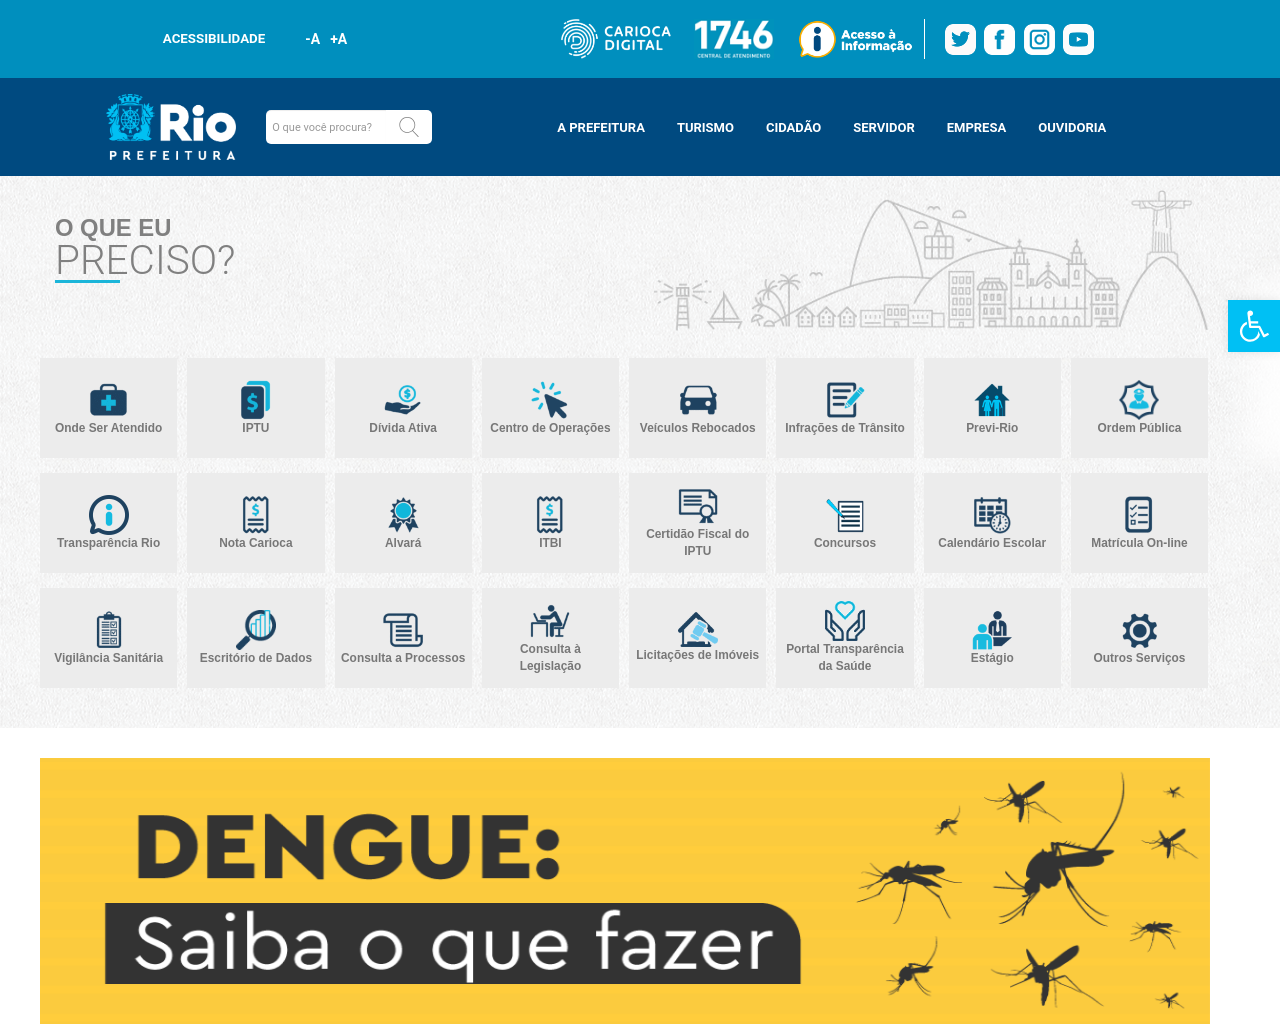 rio.gov.br